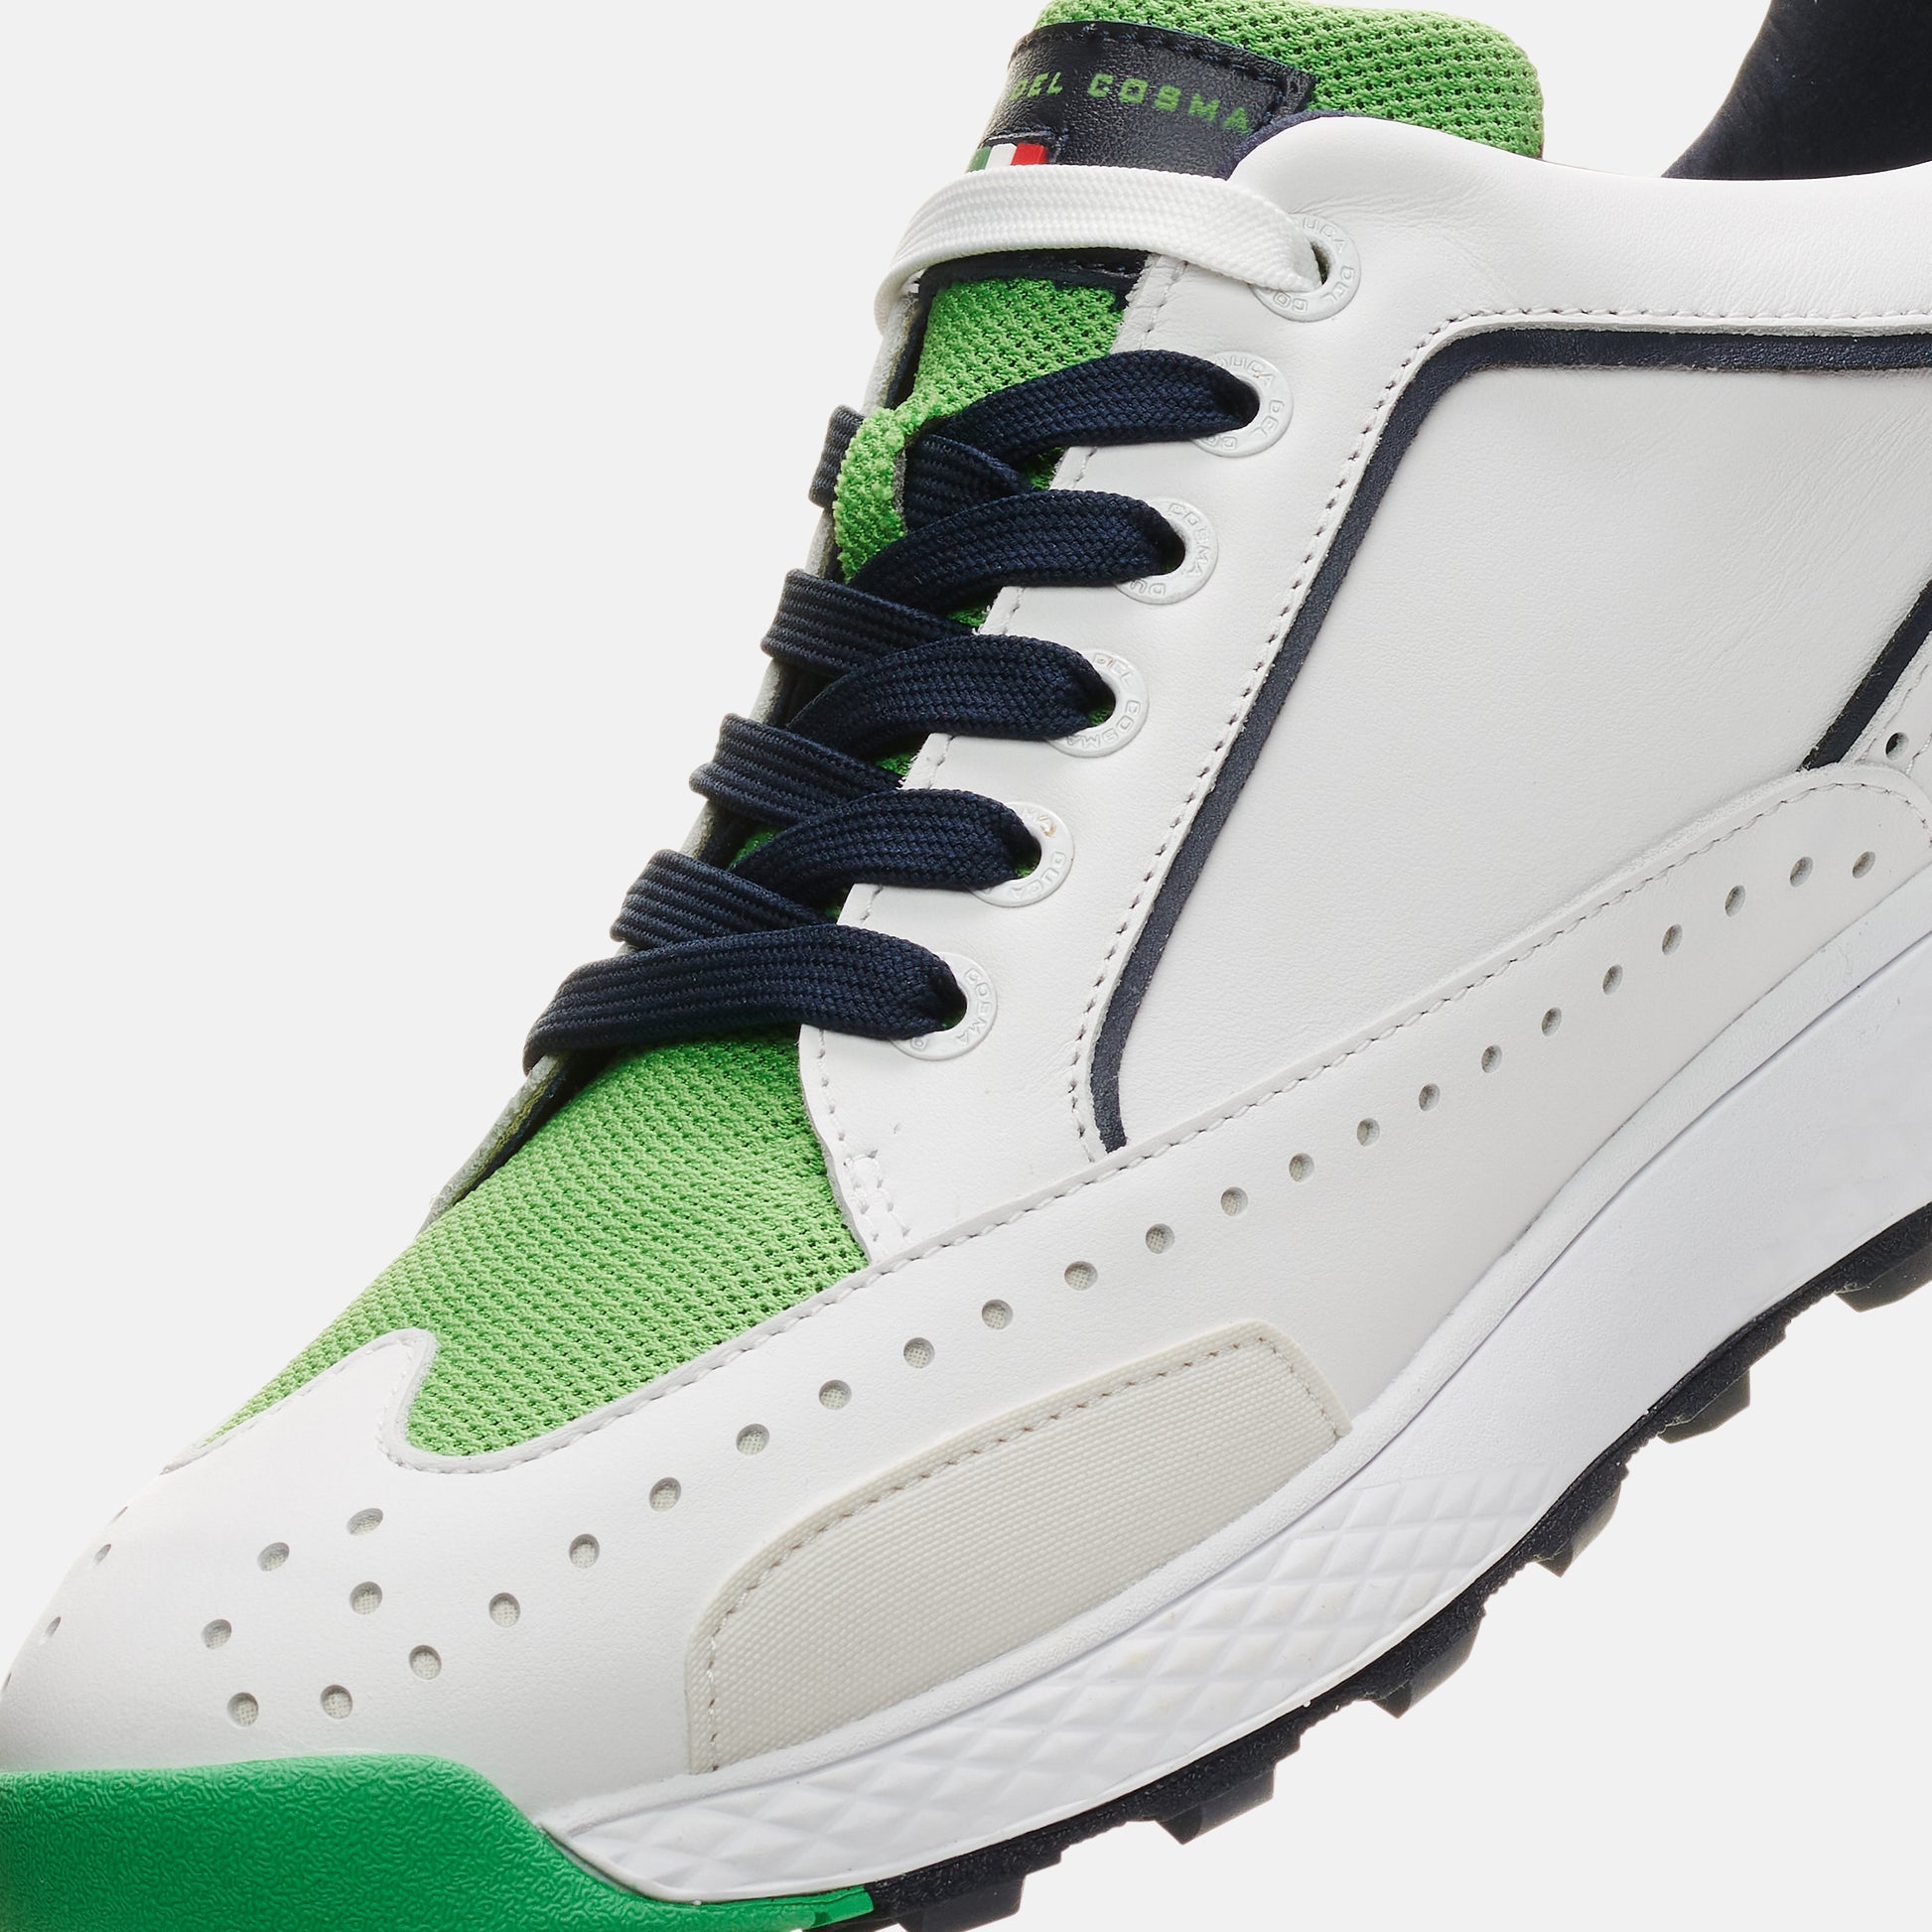 Girona White golf shoe for men's 100% waterproof and maximum comfort and grip